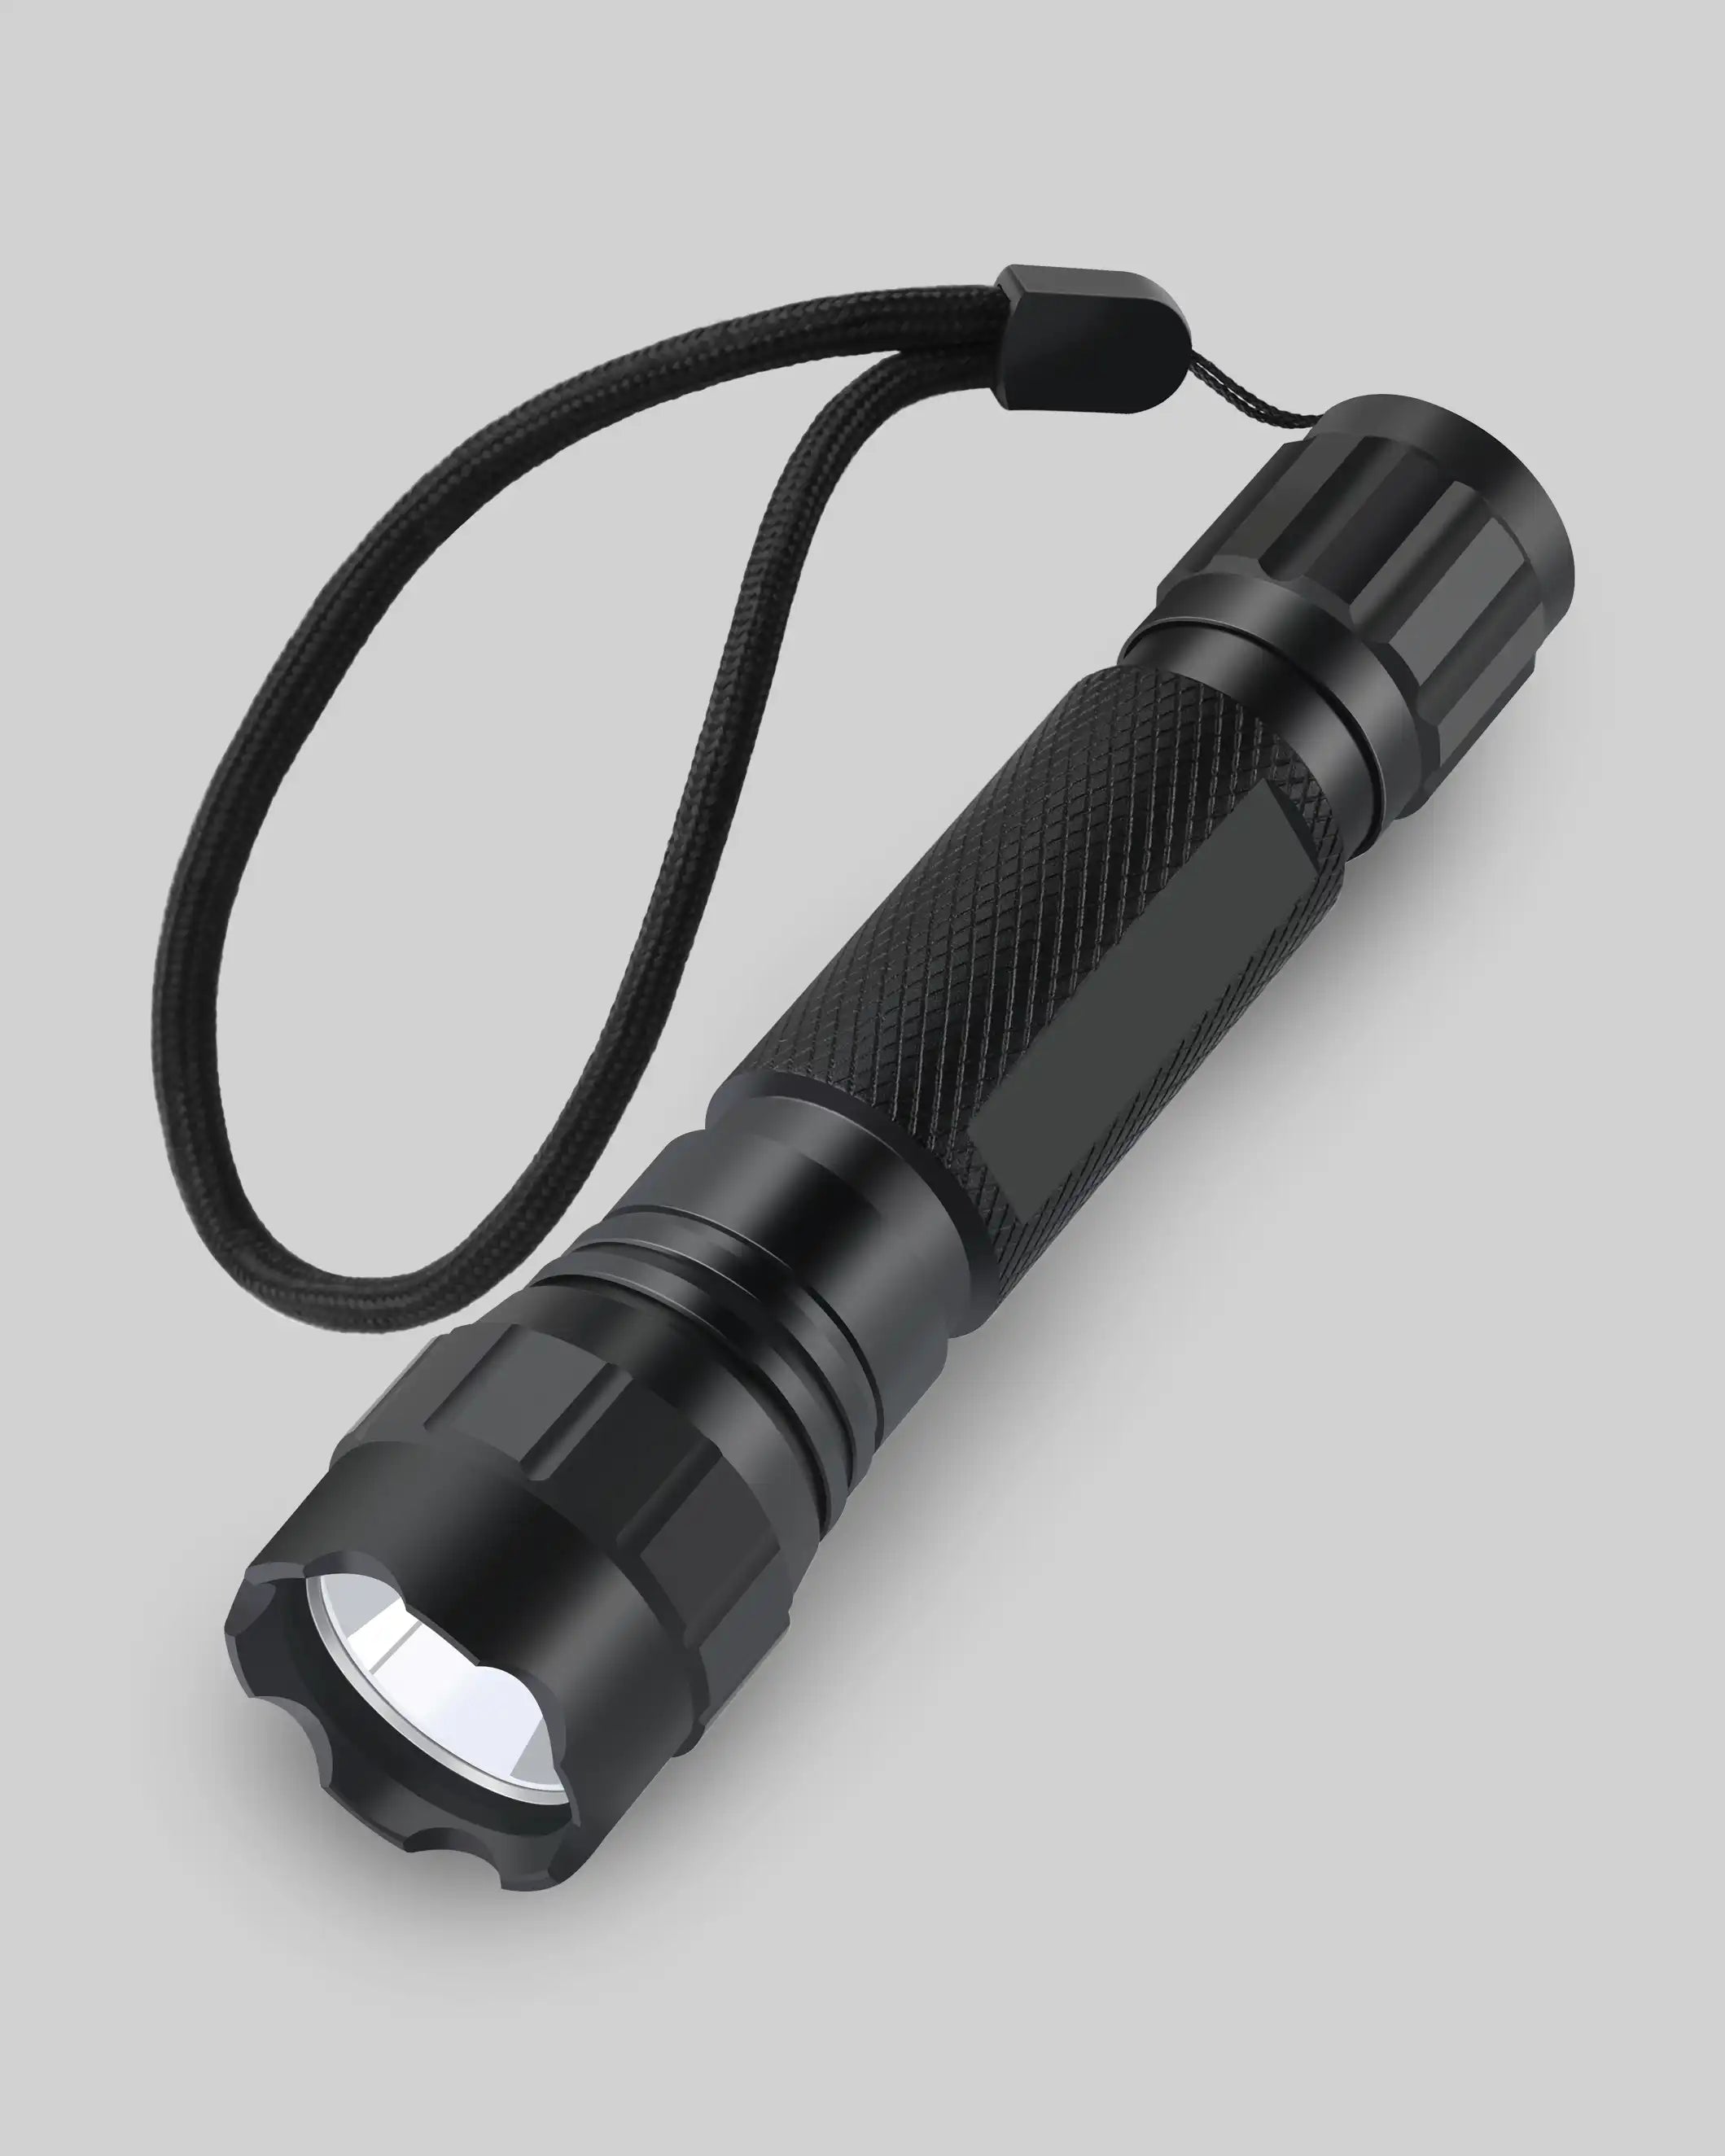 Feyachi FL21-MB Tactical Flashlight - 1200 Lumen LED Light